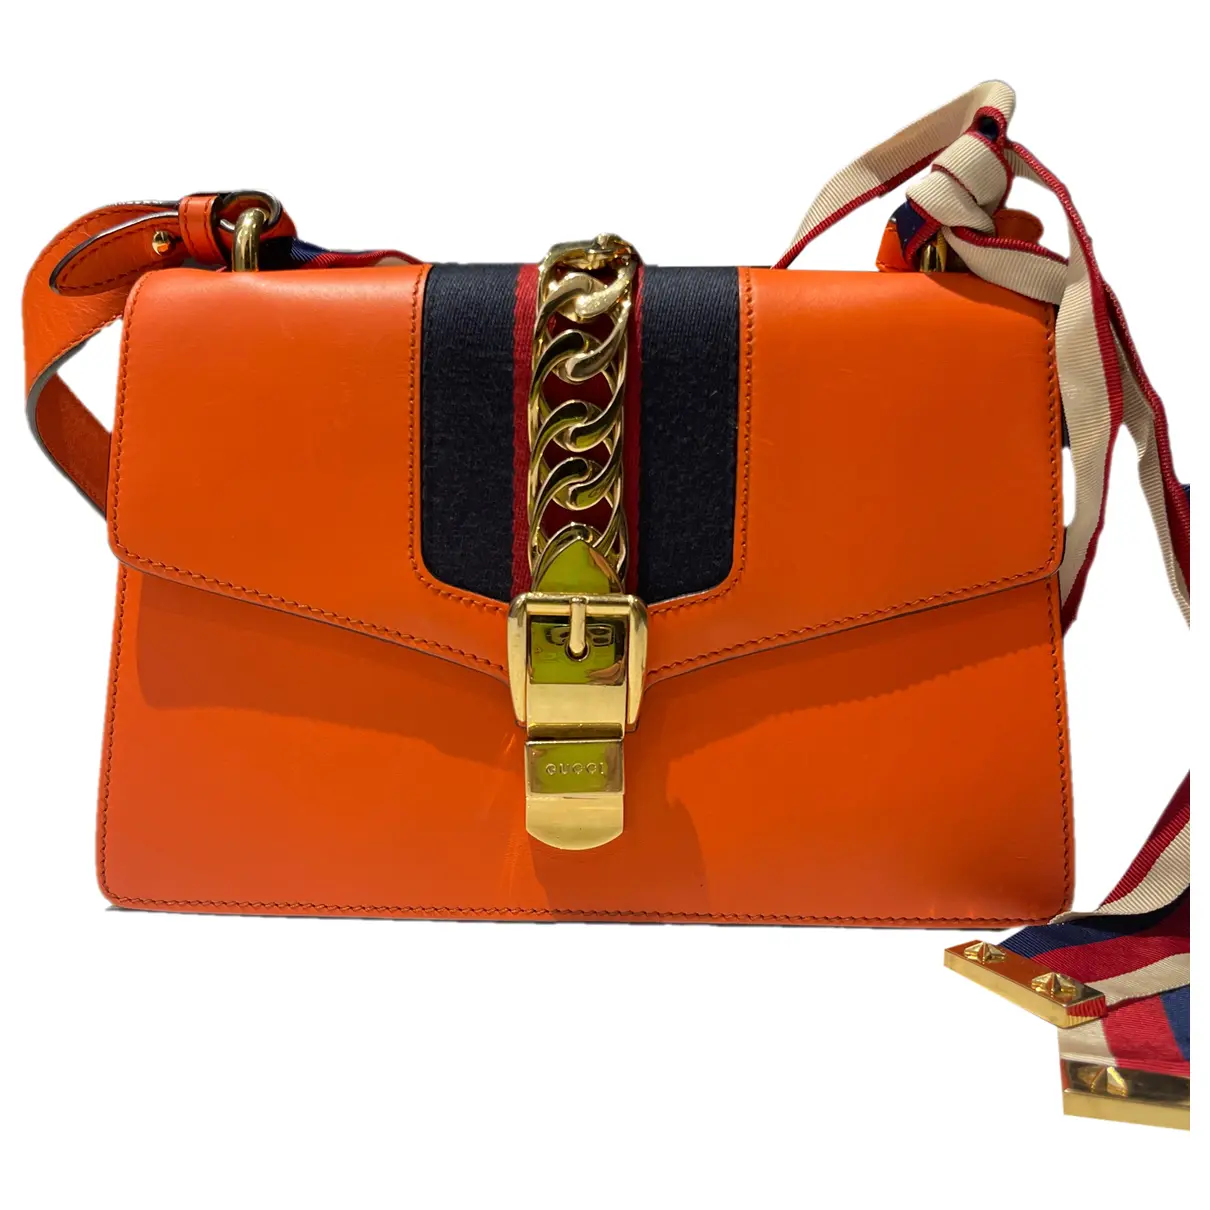 Sylvie leather handbag